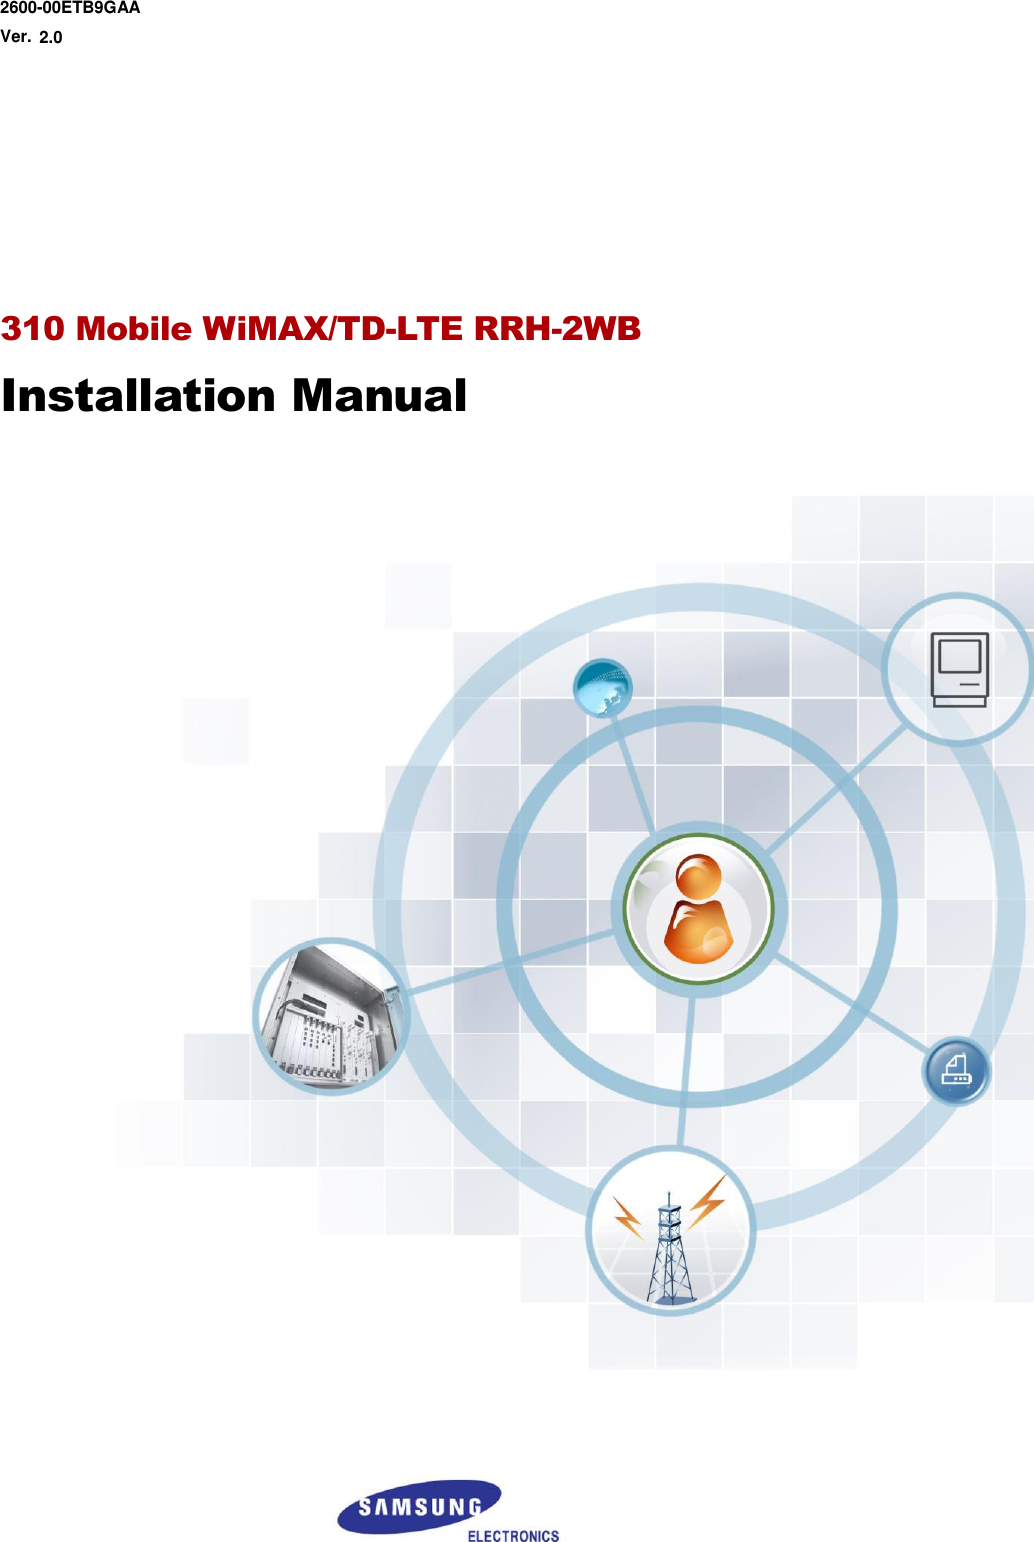  Ver.    2600-00ETB9GAA 2.0        310 Mobile WiMAX/TD-LTE RRH-2WB Installation Manual    